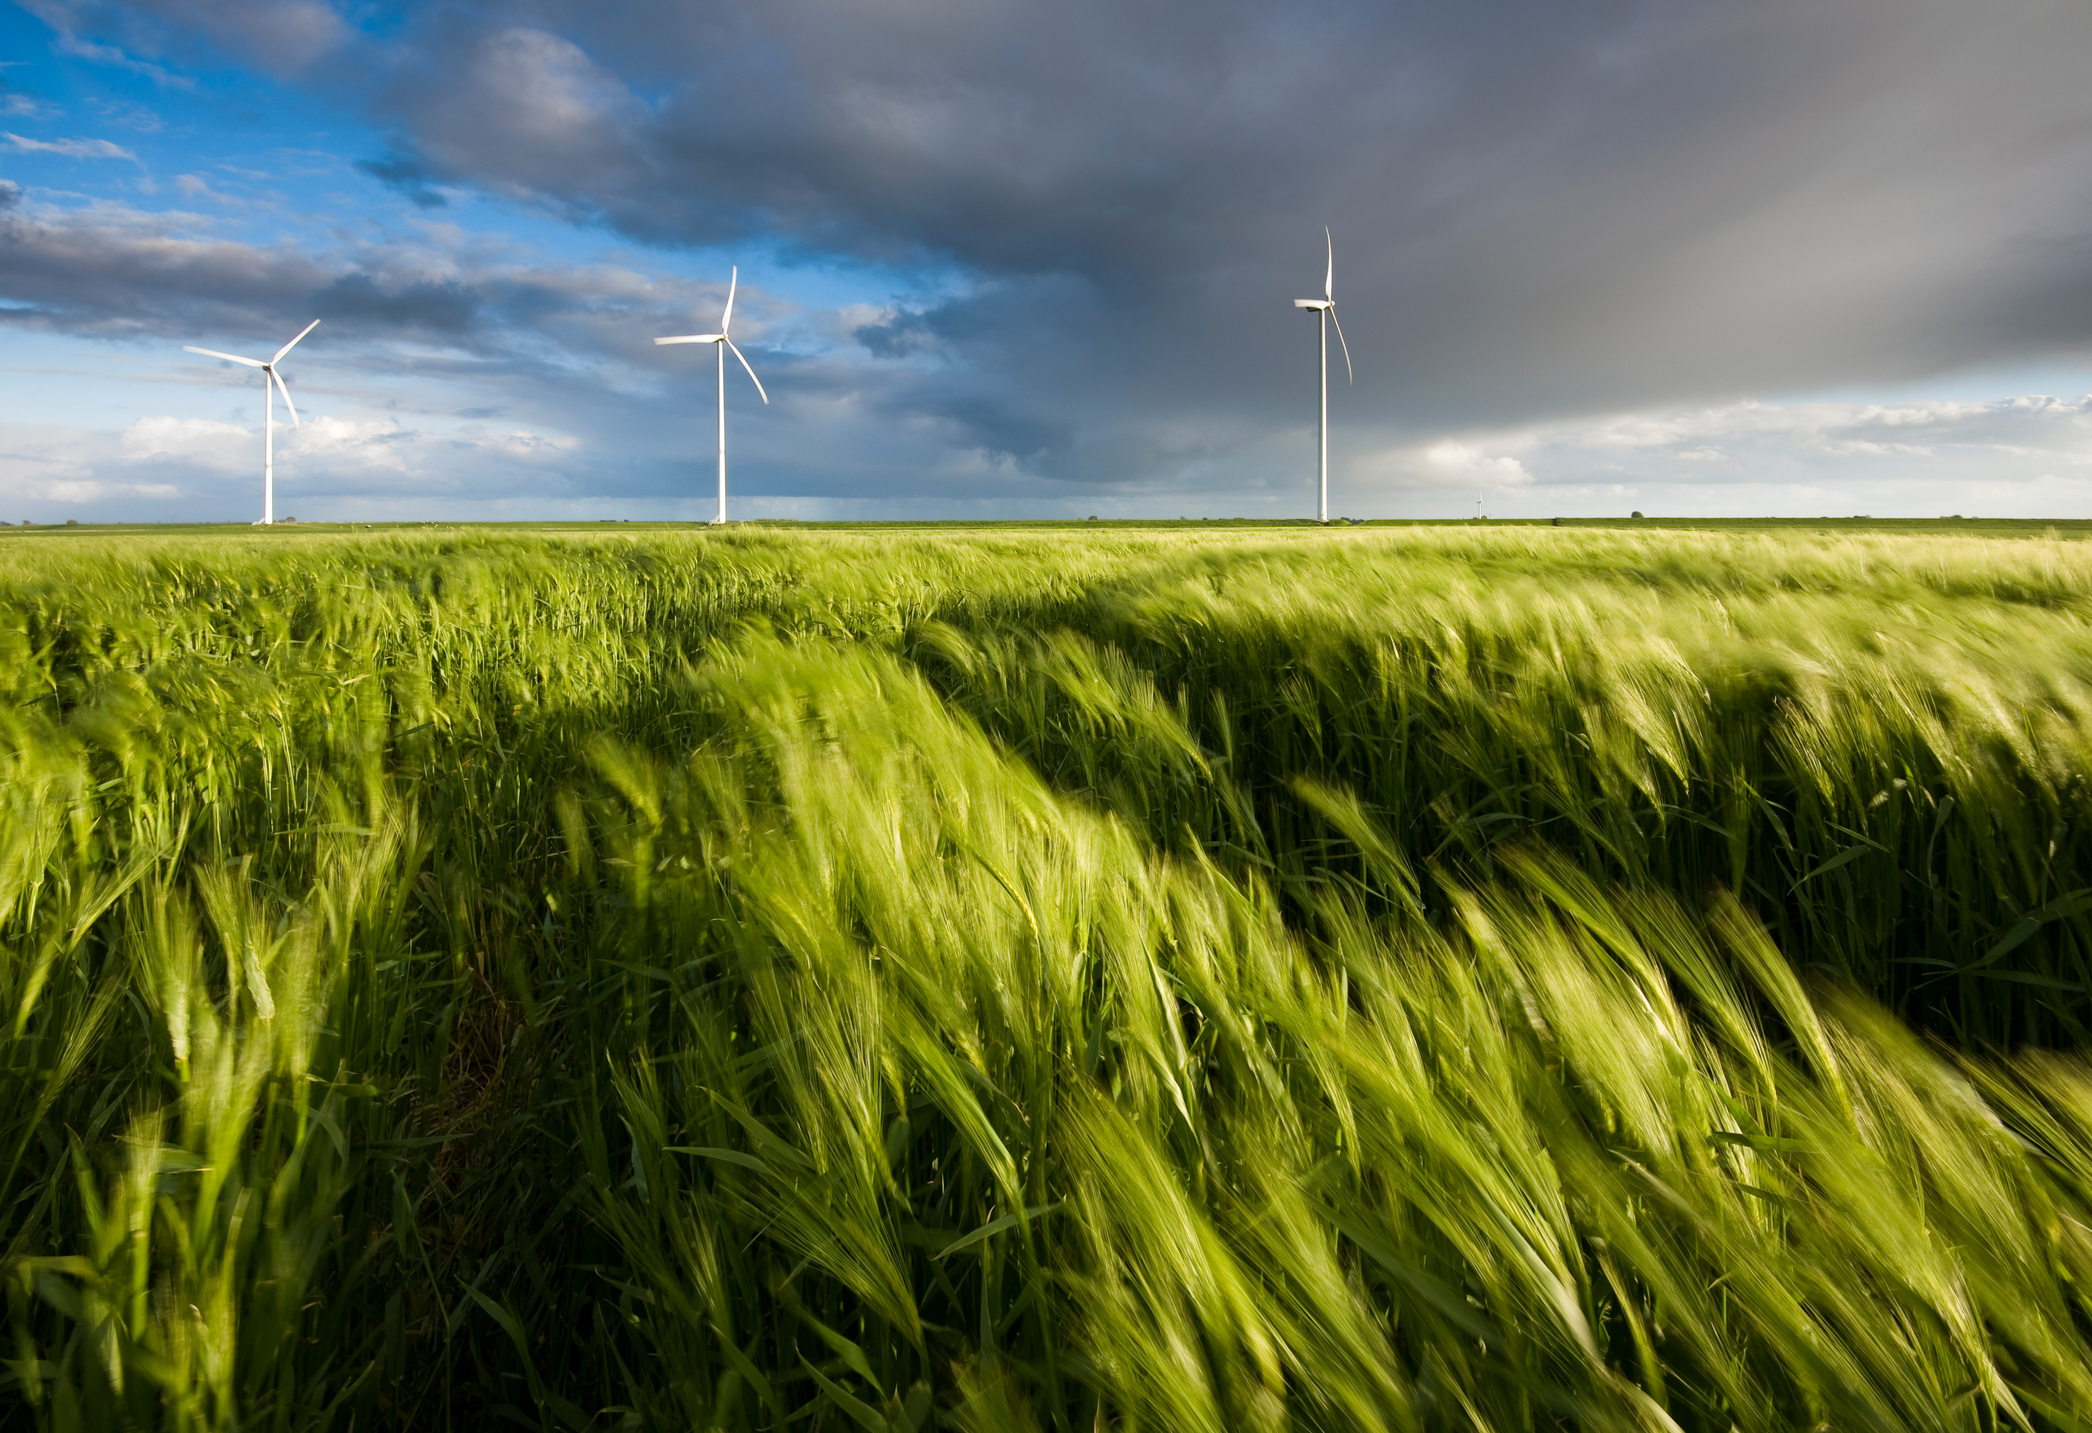 Wind turbines capture wind energy in grassy field